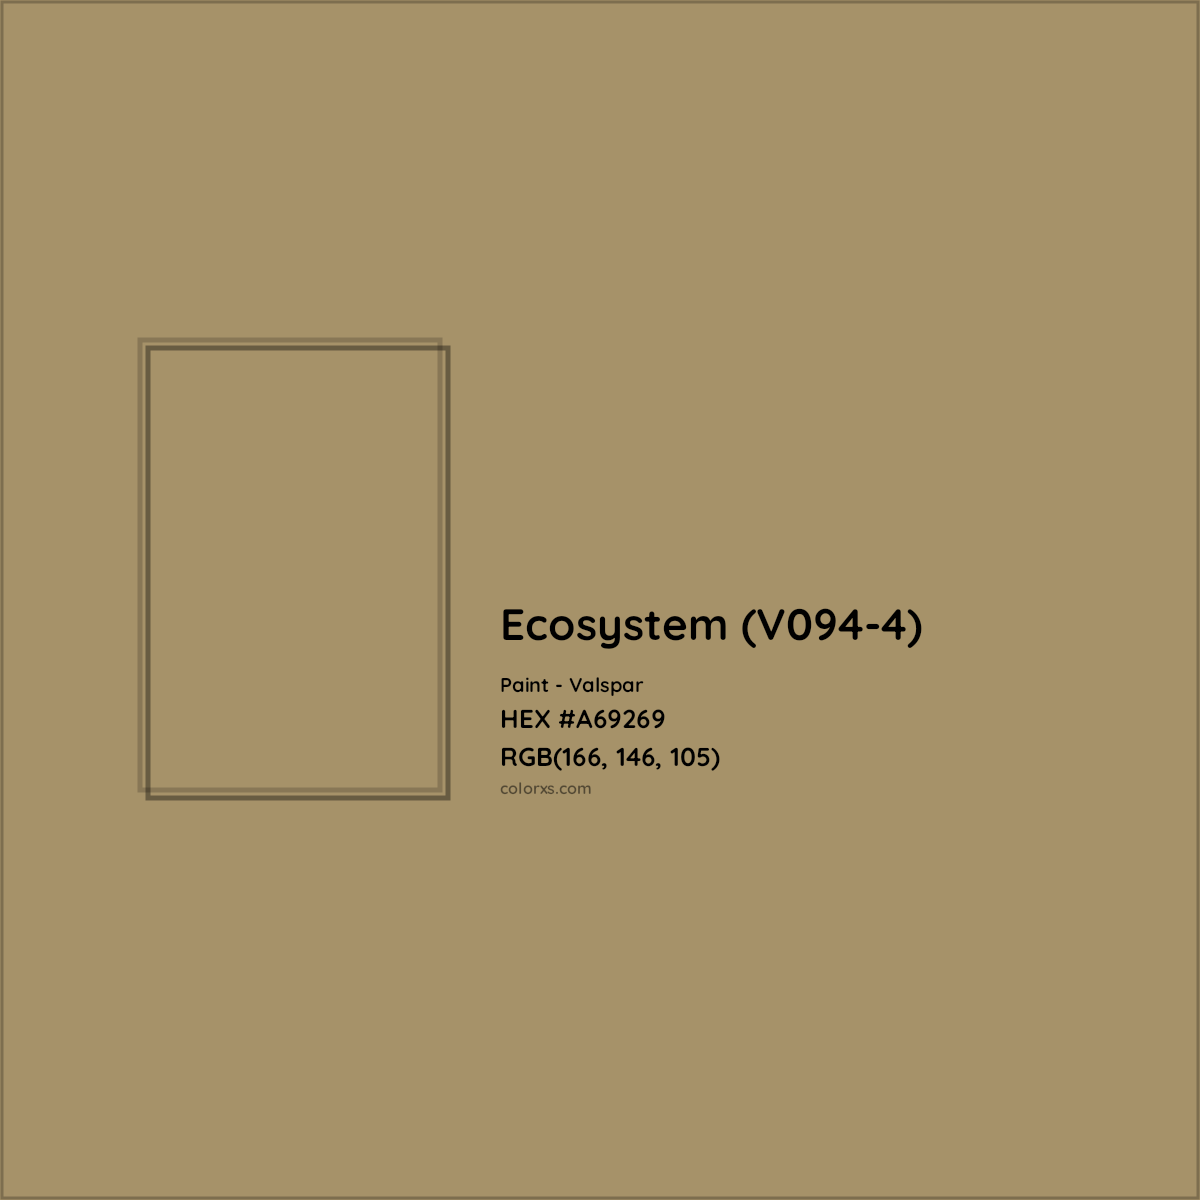 HEX #A69269 Ecosystem (V094-4) Paint Valspar - Color Code